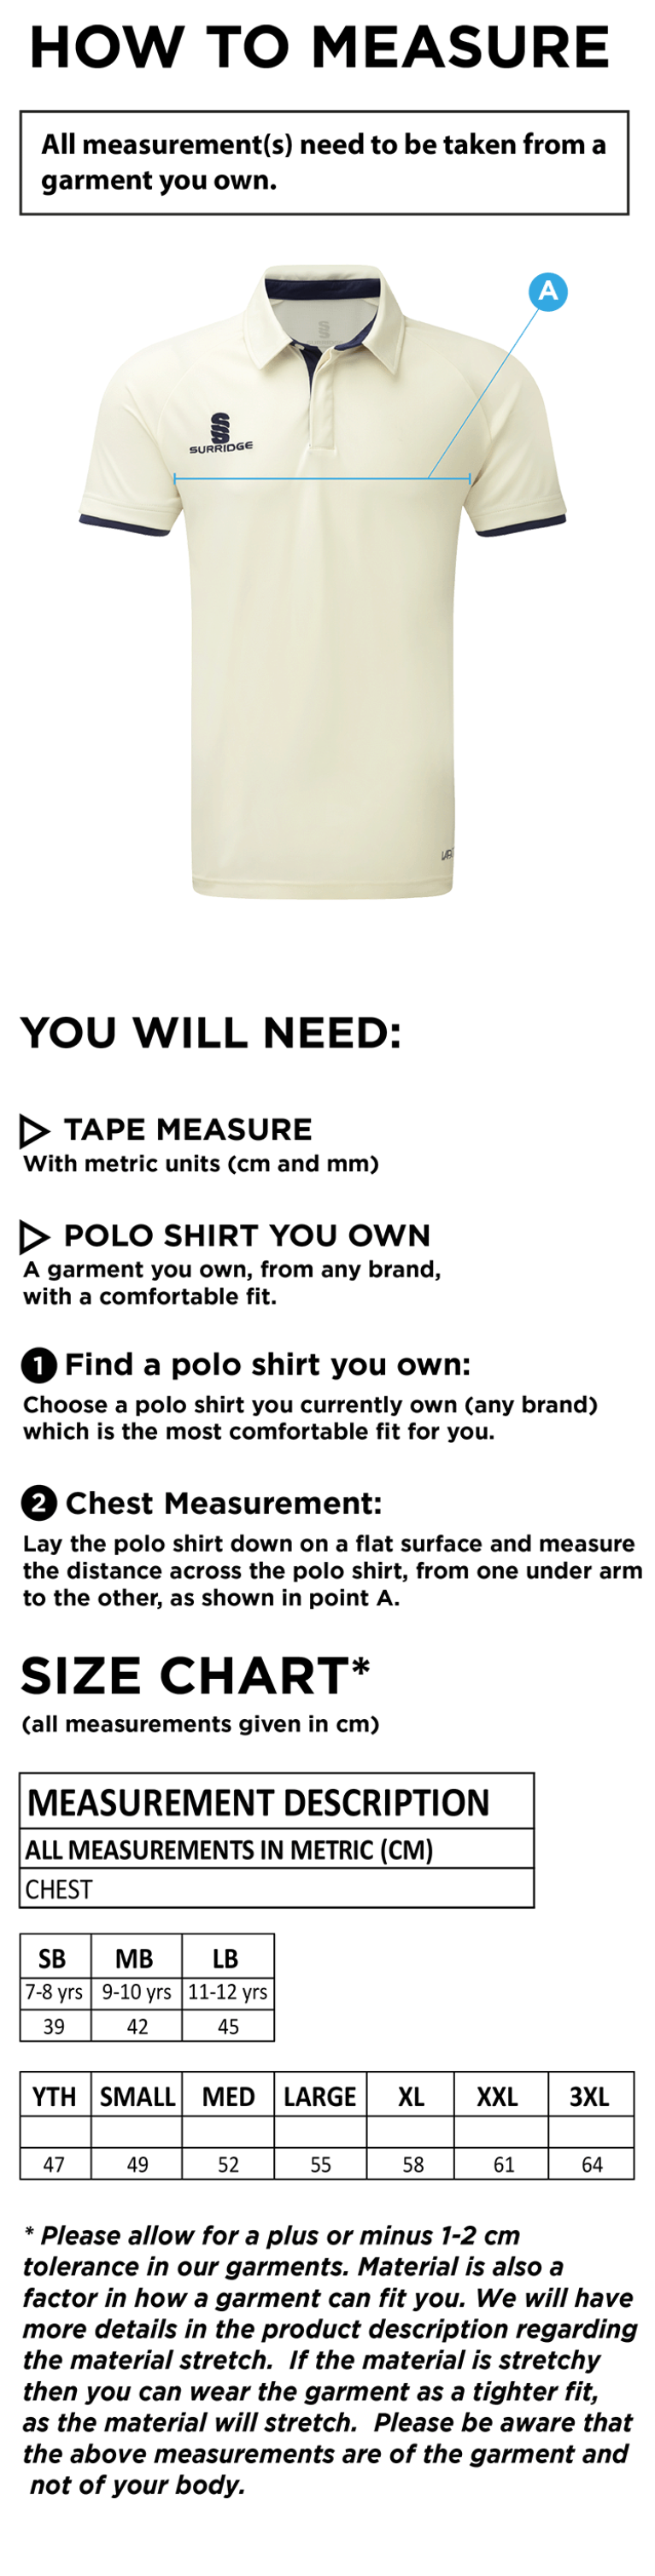 Byfleet CC COLT Tek S/S Shirt - Size Guide